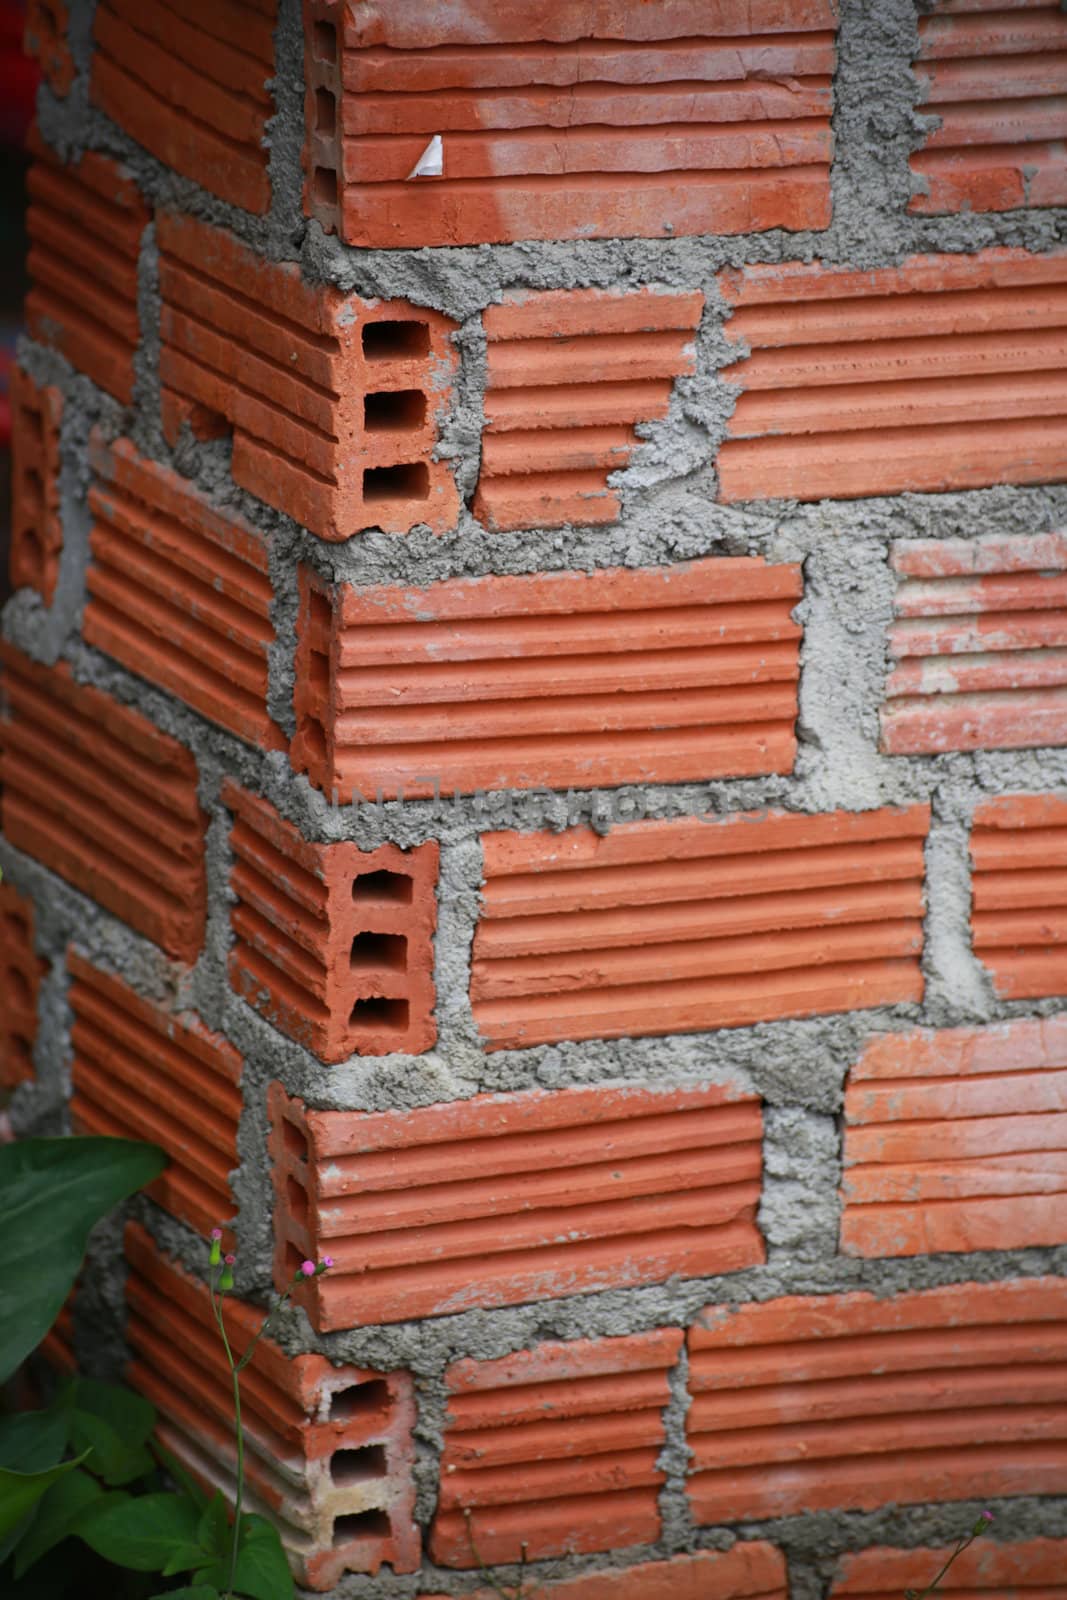 This brick pillar looks so strong but simplicity.